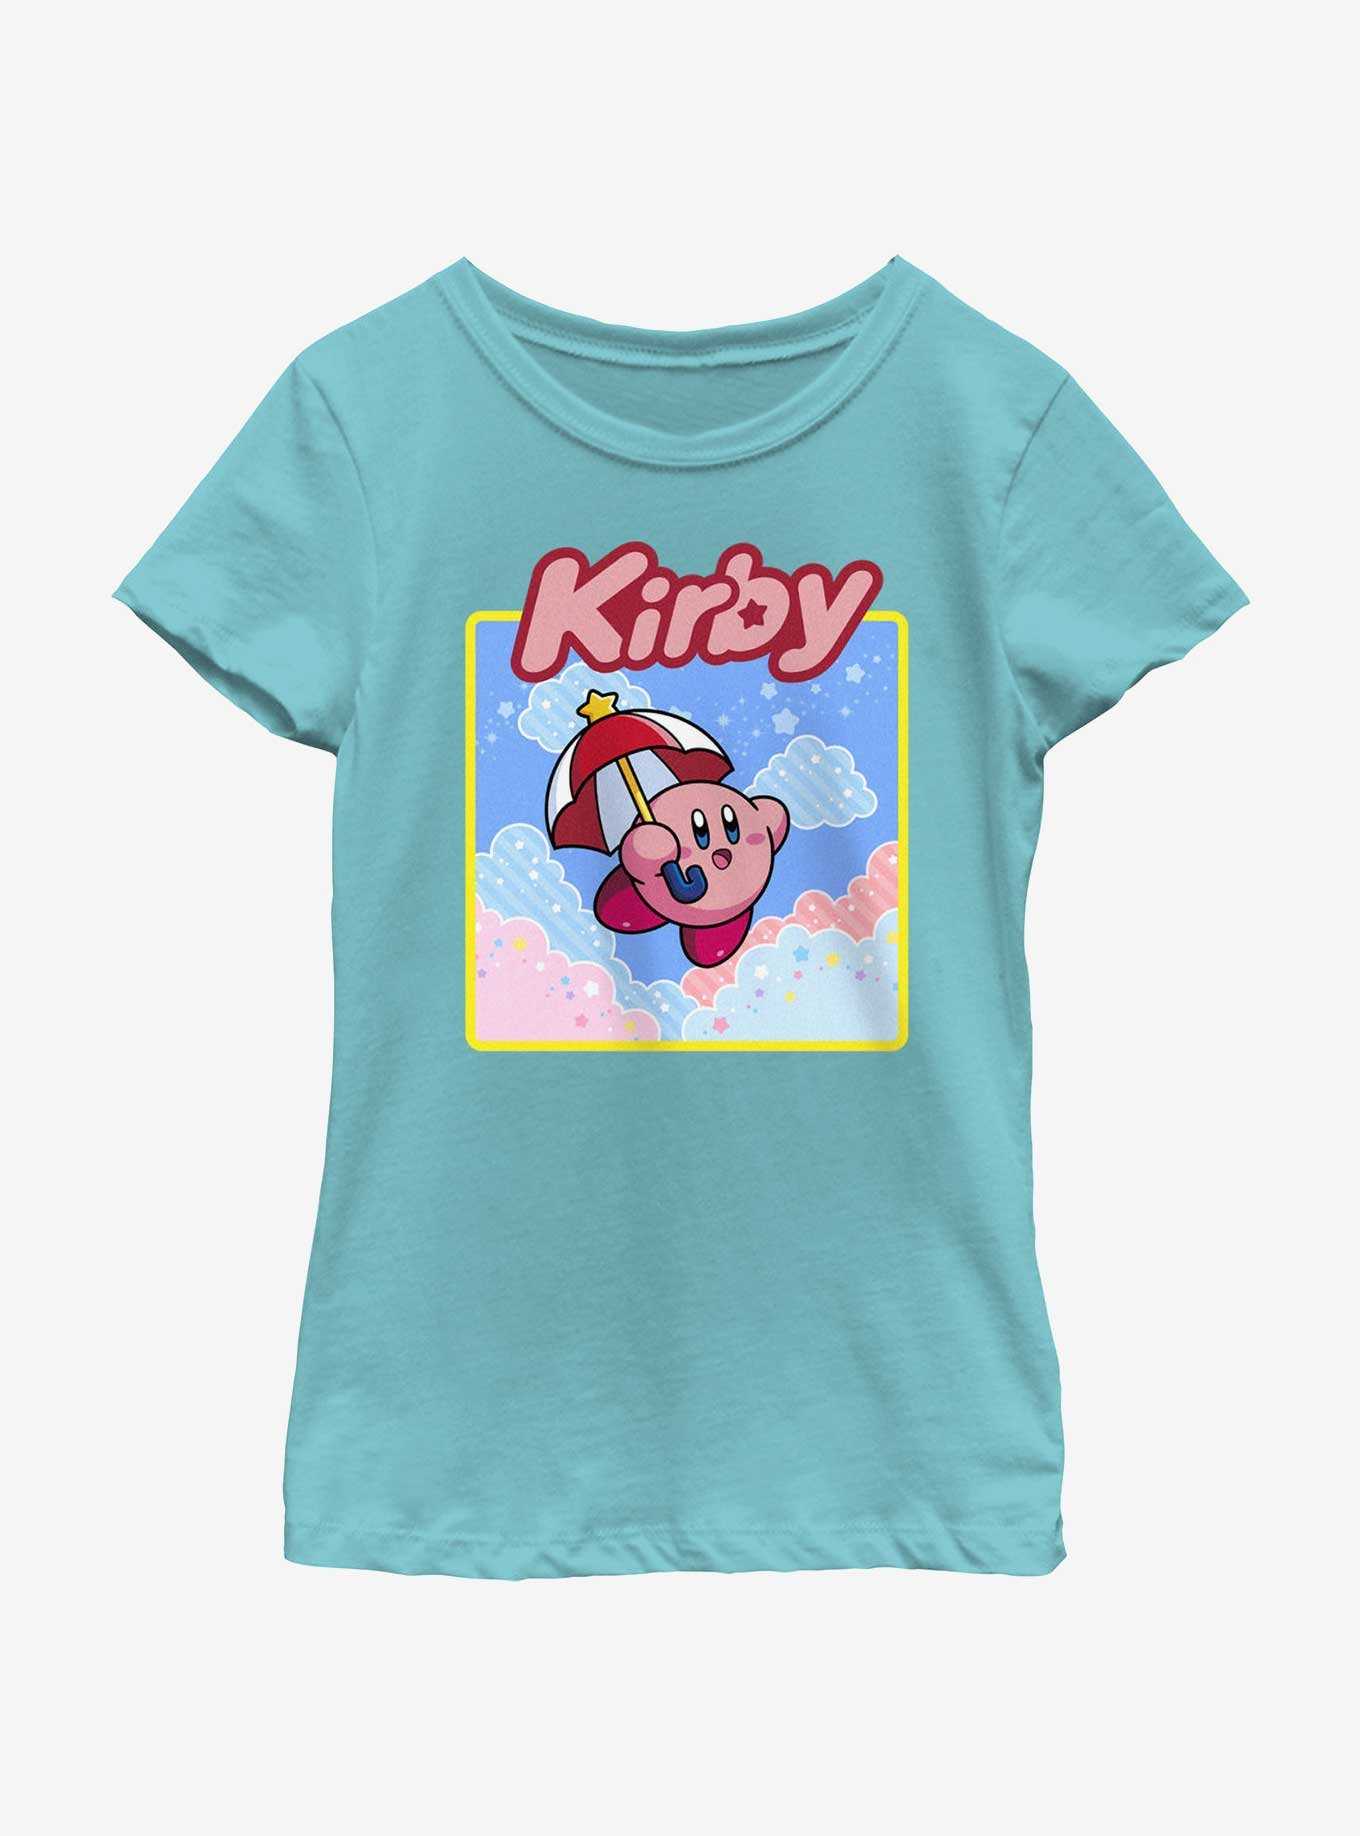 Kirby Umbrella Starry Flight Youth Girls T-Shirt, , hi-res